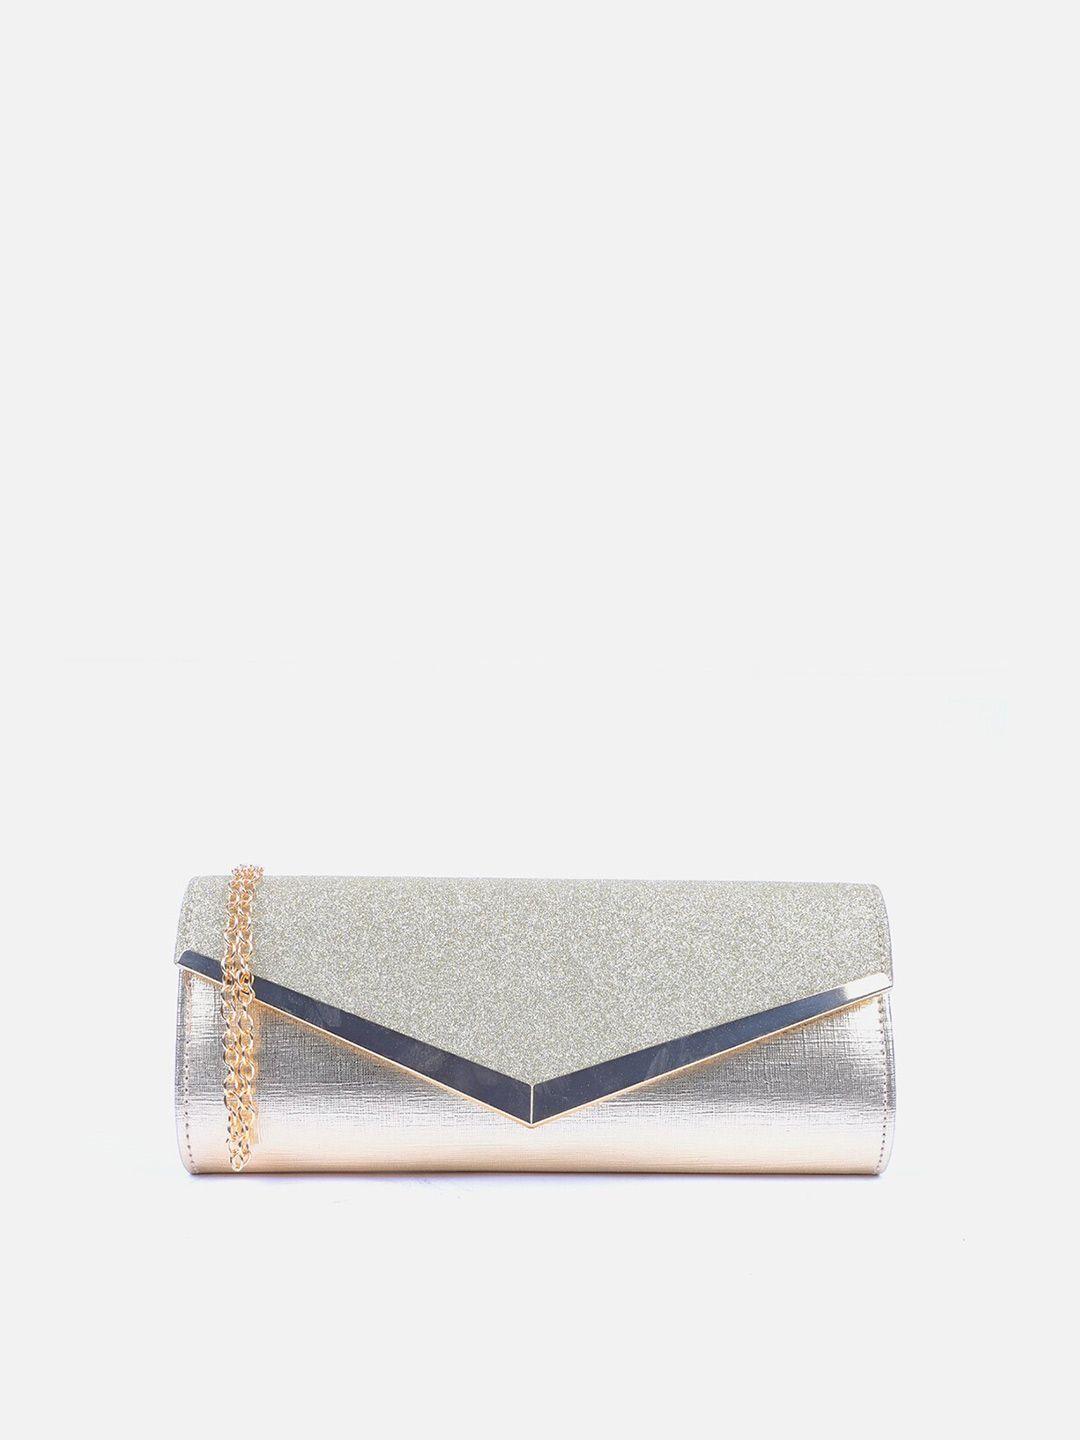 carlton-london-embellished-purse-clutch-with-shoulder-strap